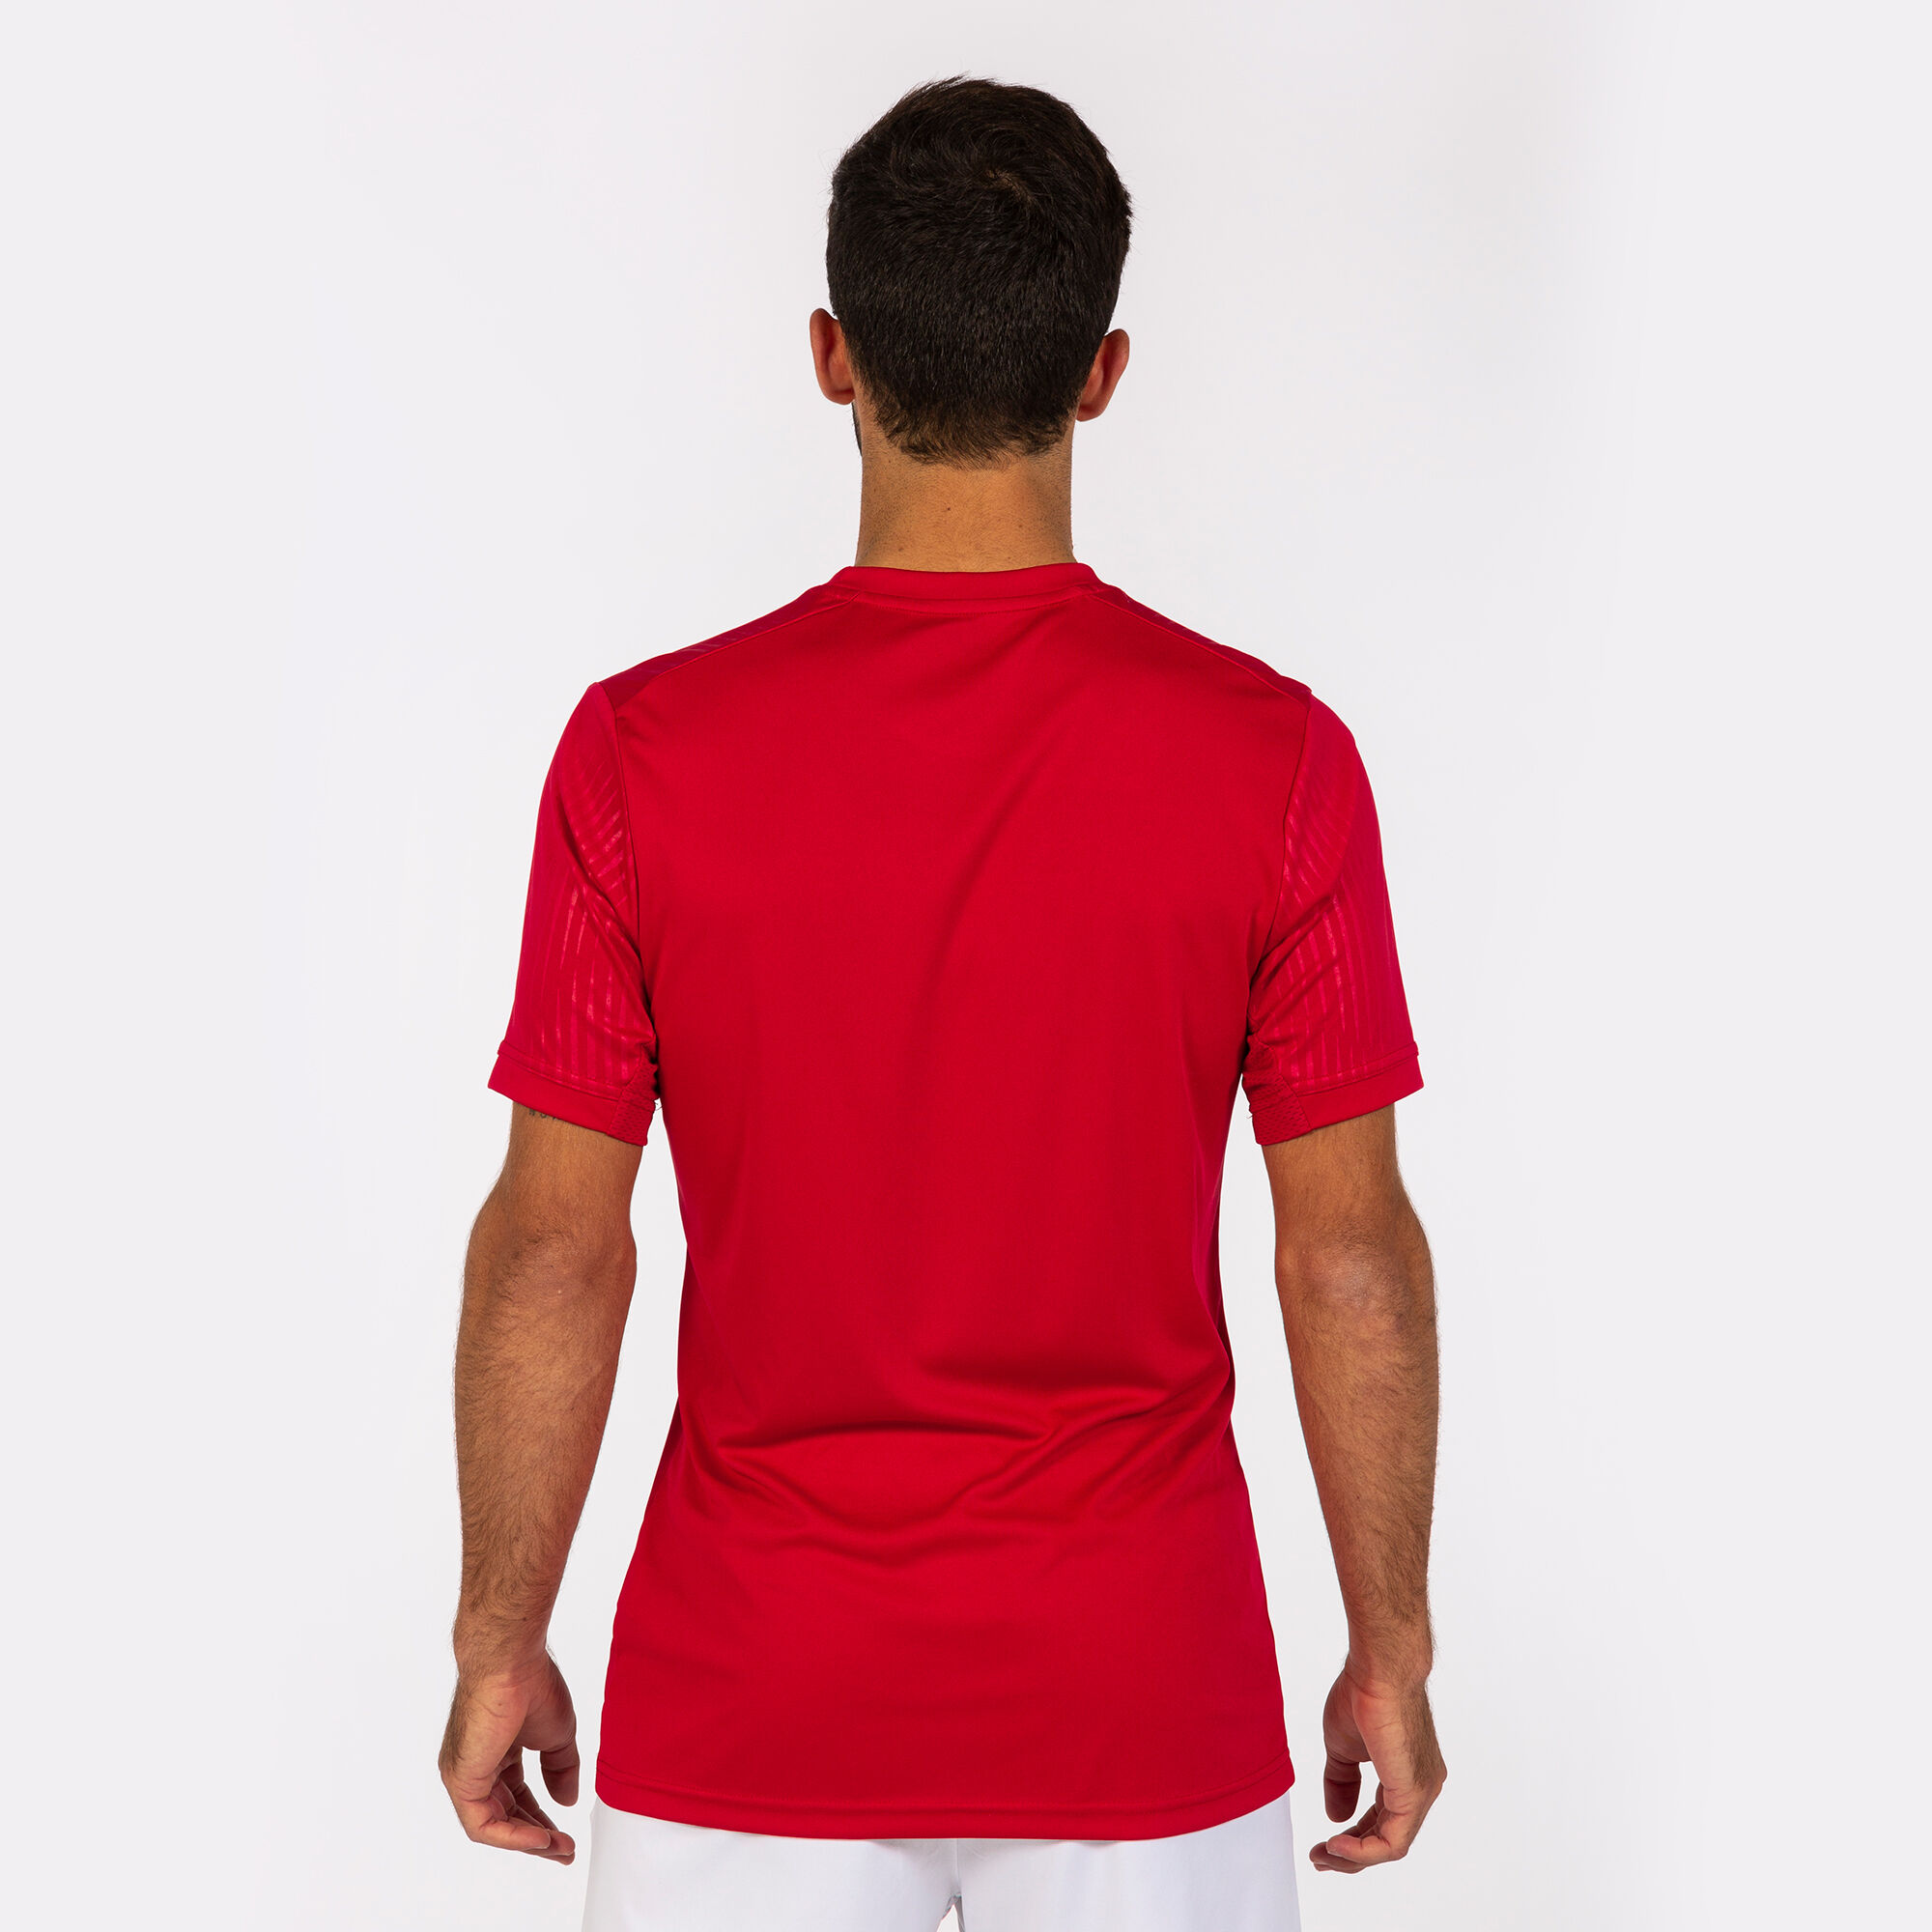 Camiseta manga corta hombre Montreal rojo